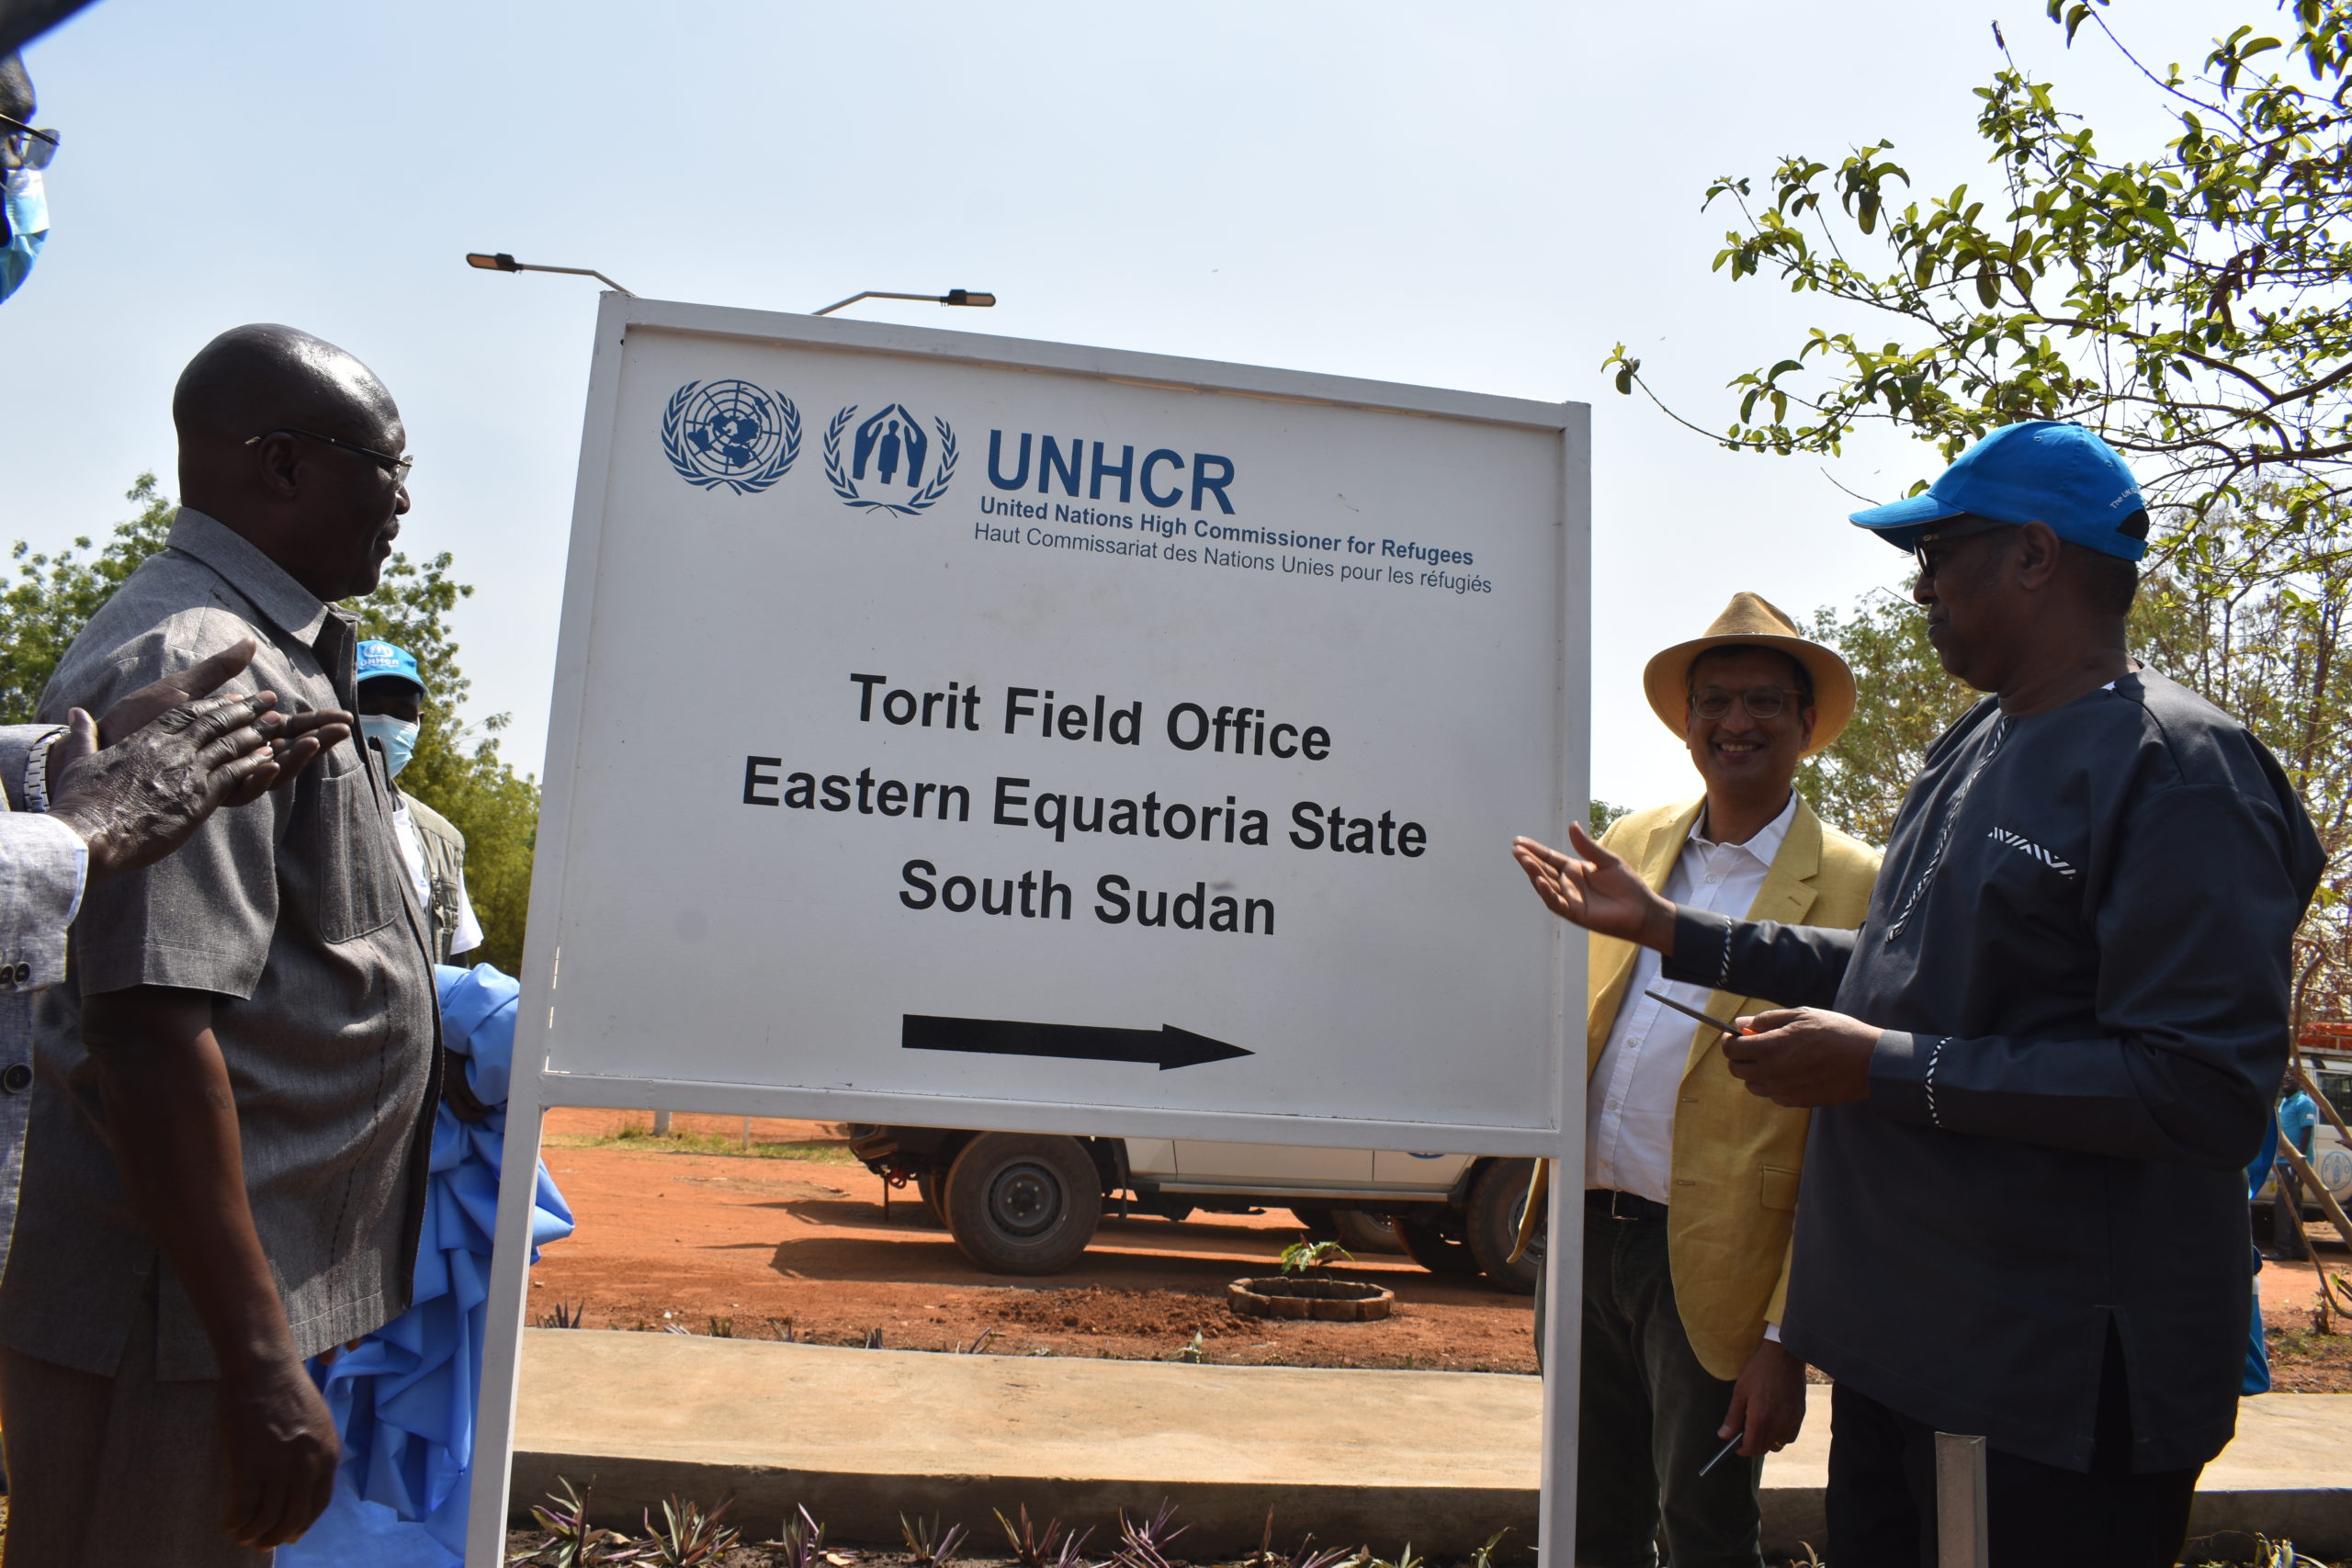 Transition to development programs, UNHCR tells partners